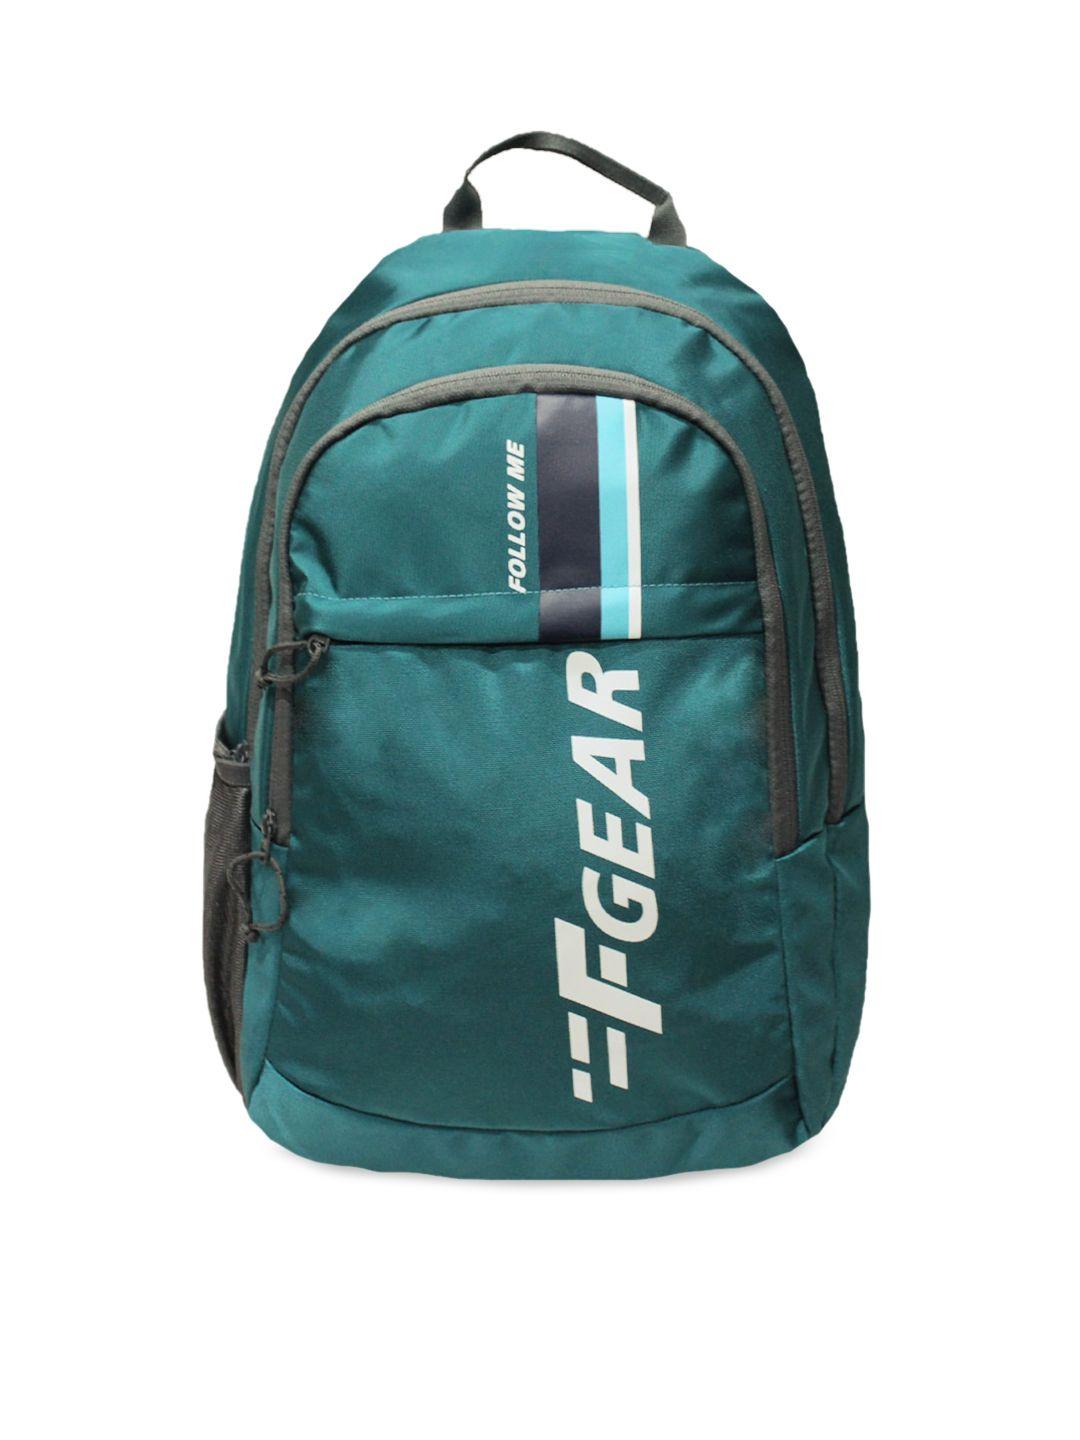 f gear unisex turquoise blue & black brand logo backpack